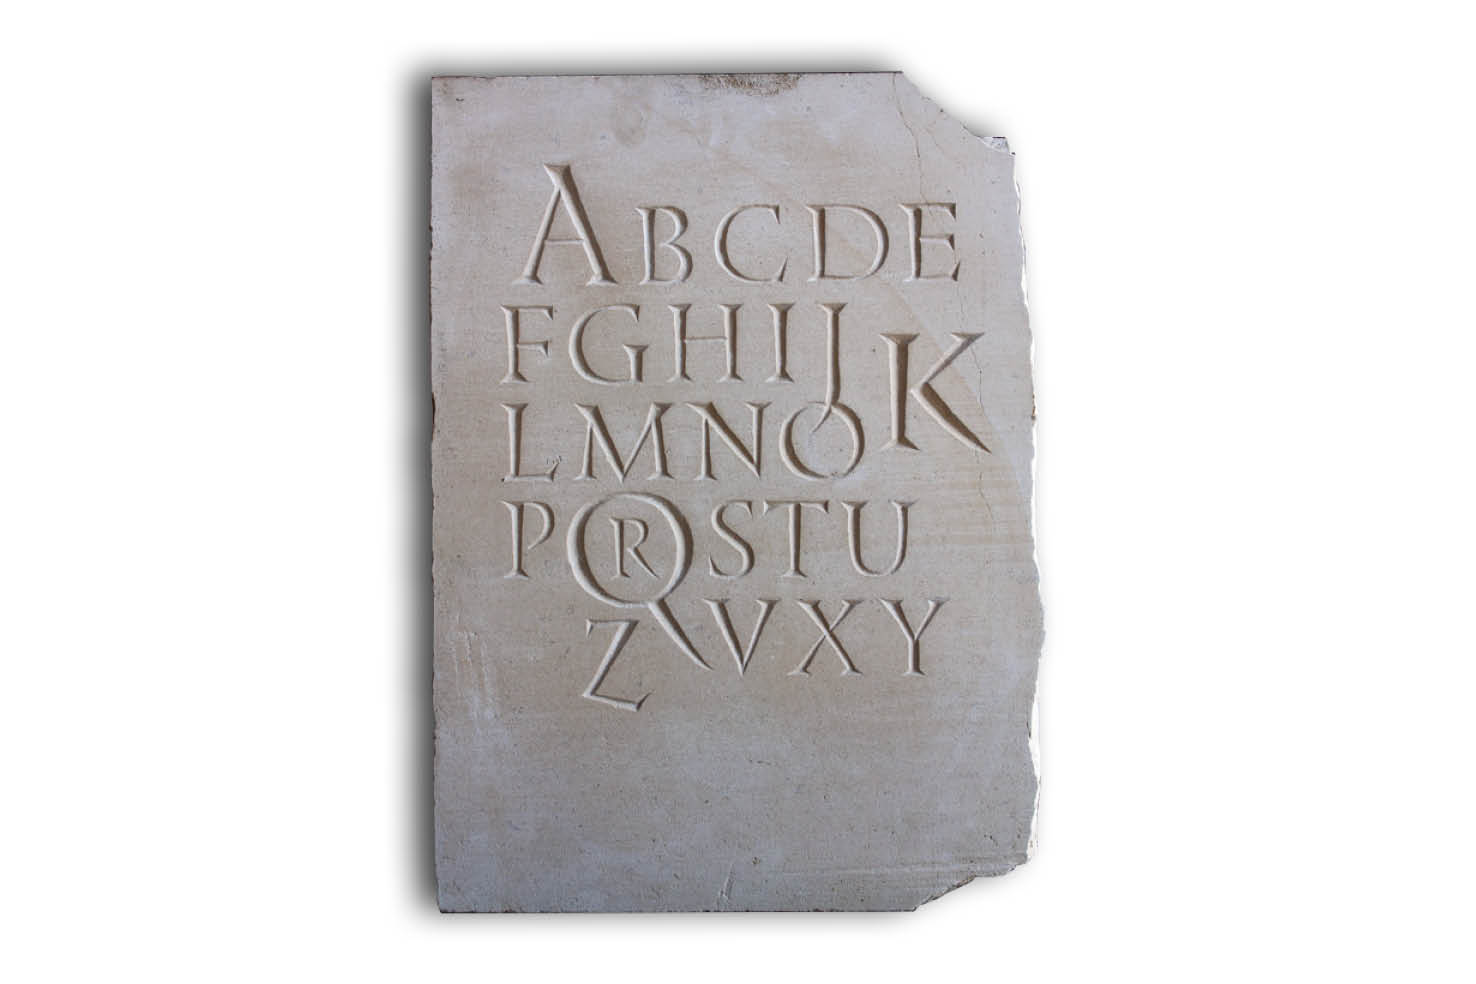 type design typographique : leo guibert stone carving